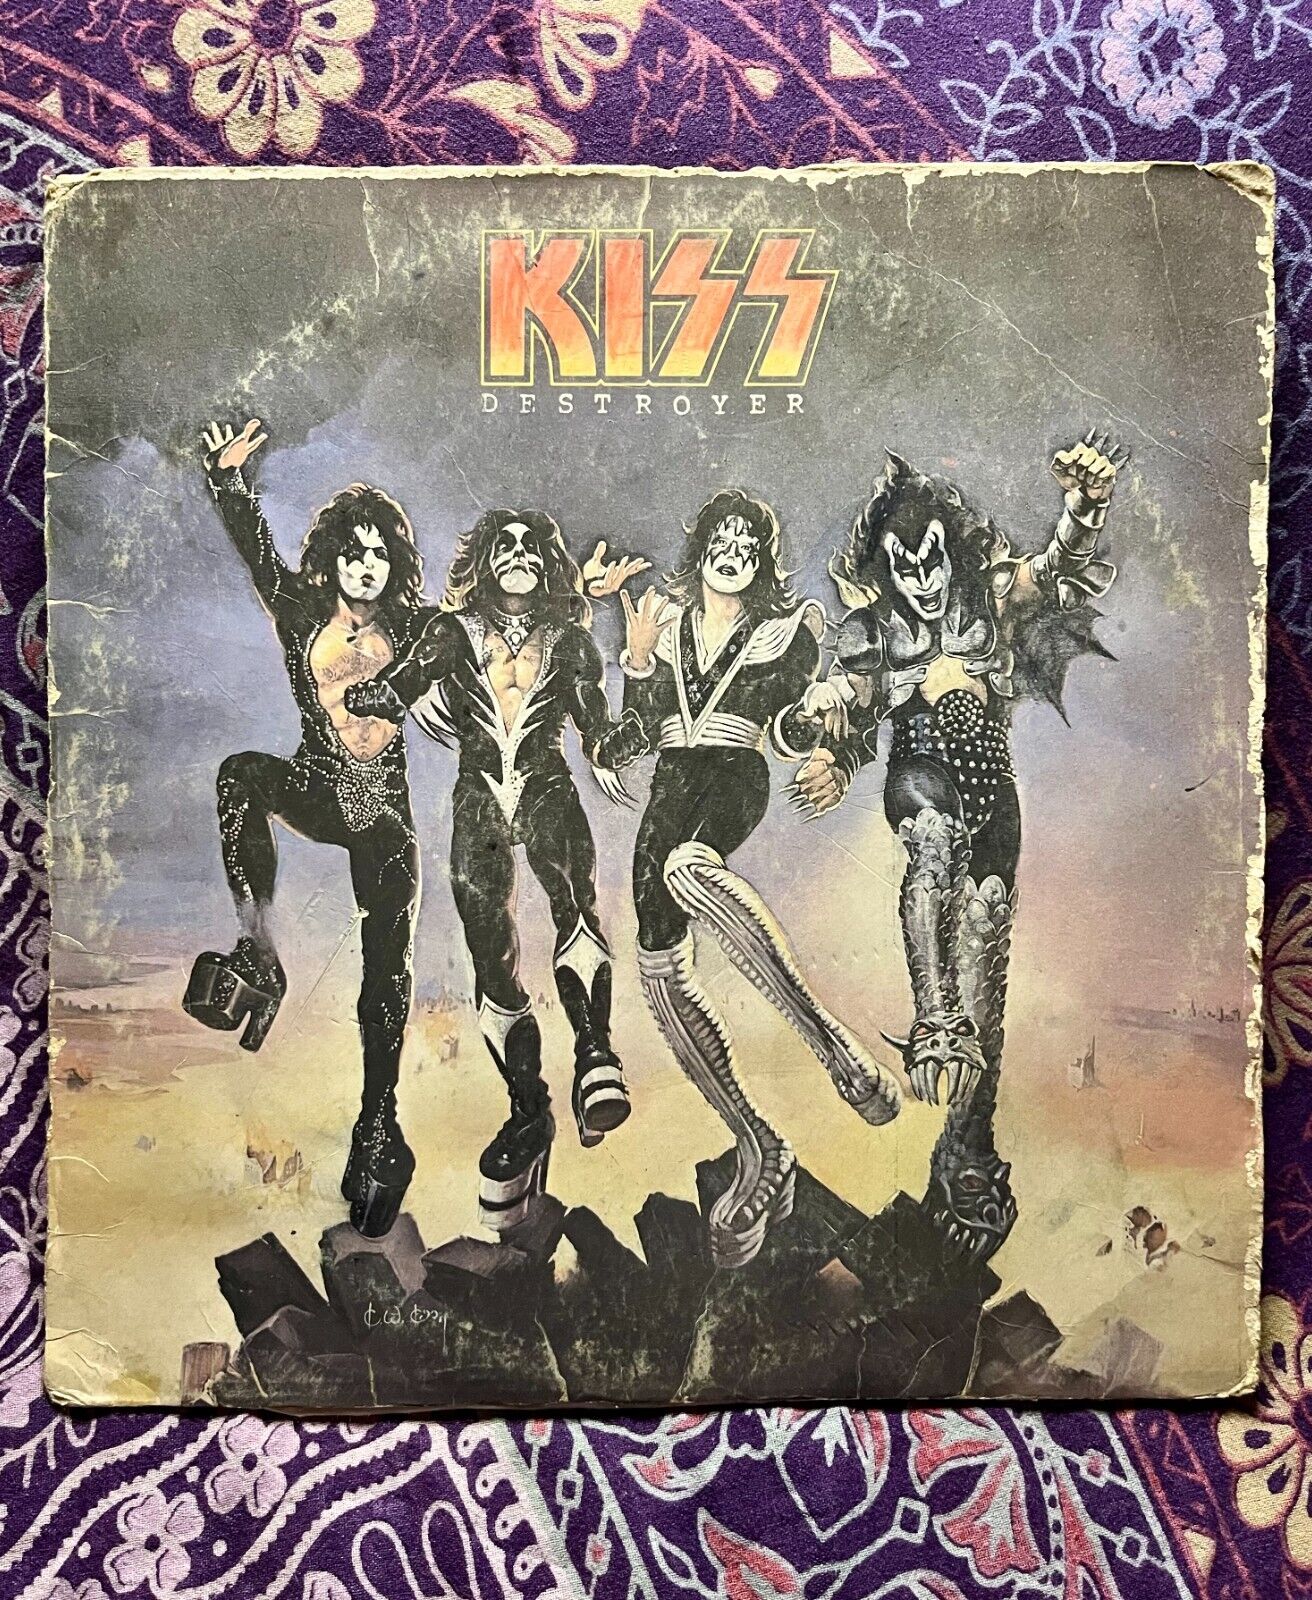 Destroyer by Kiss (Casablanca, NBLP 7025) w Sleeve, 1976 LP, VG / VG